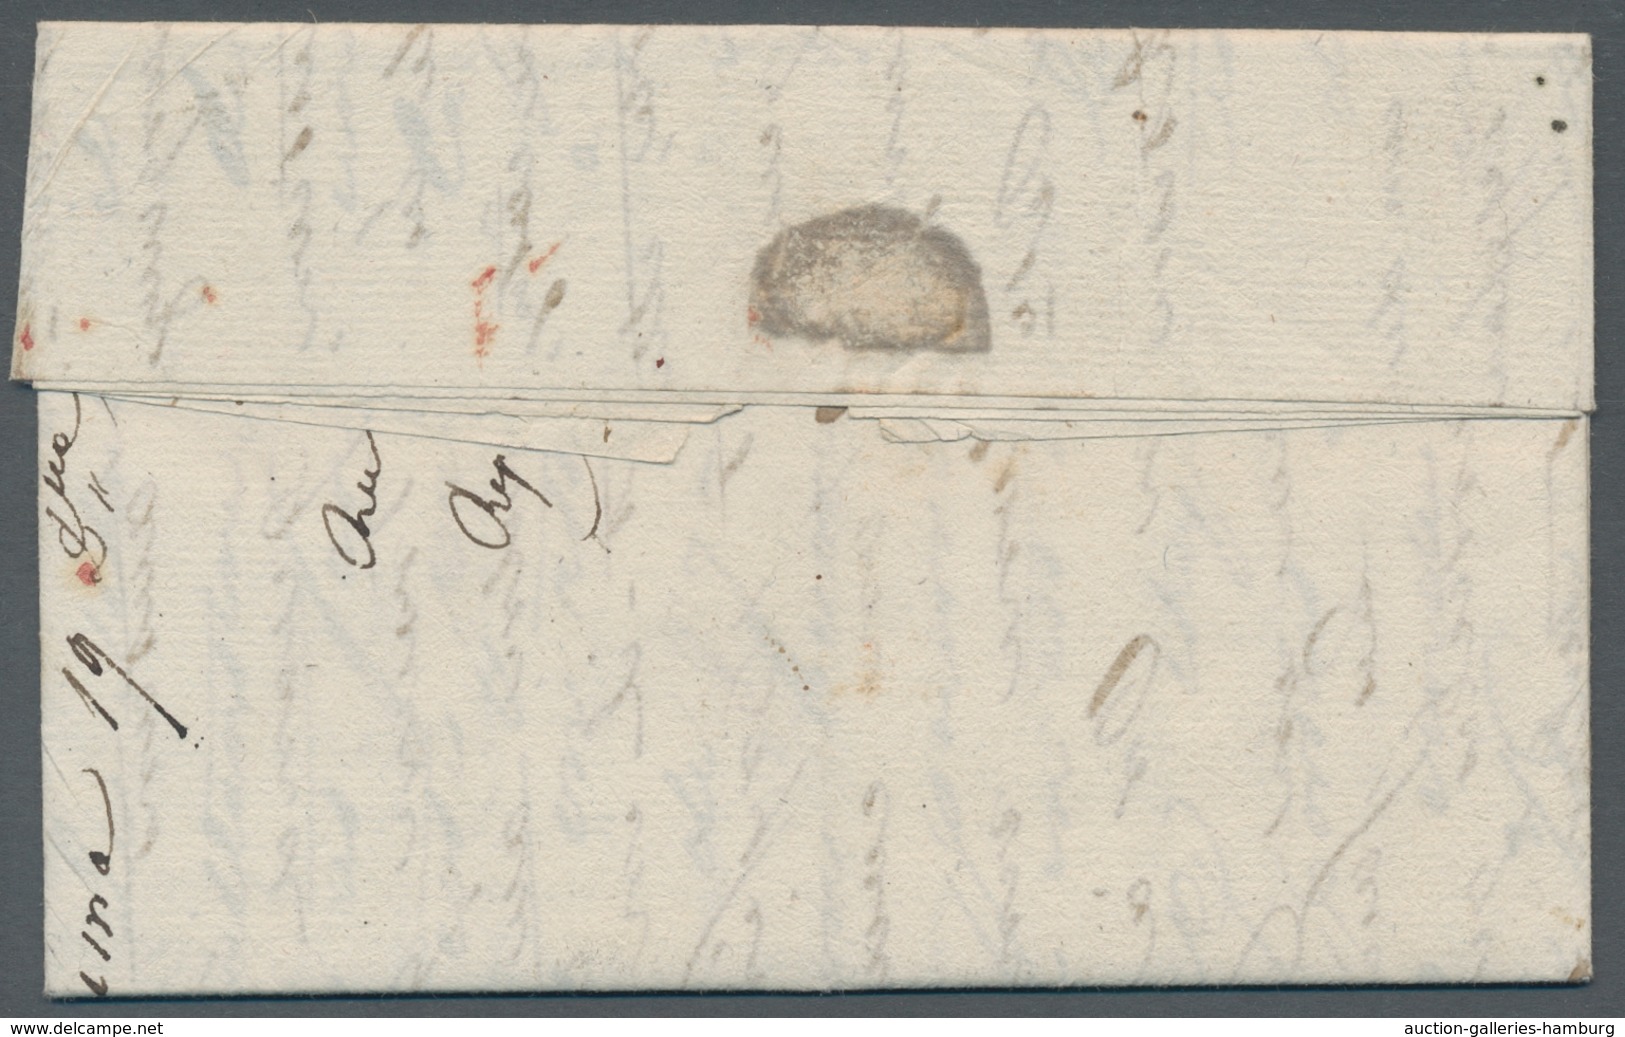 Peru: 1826, Attractive Pre-philatelic Letter With Full Content, Run Inside Peru From Lima To Arequip - Peru